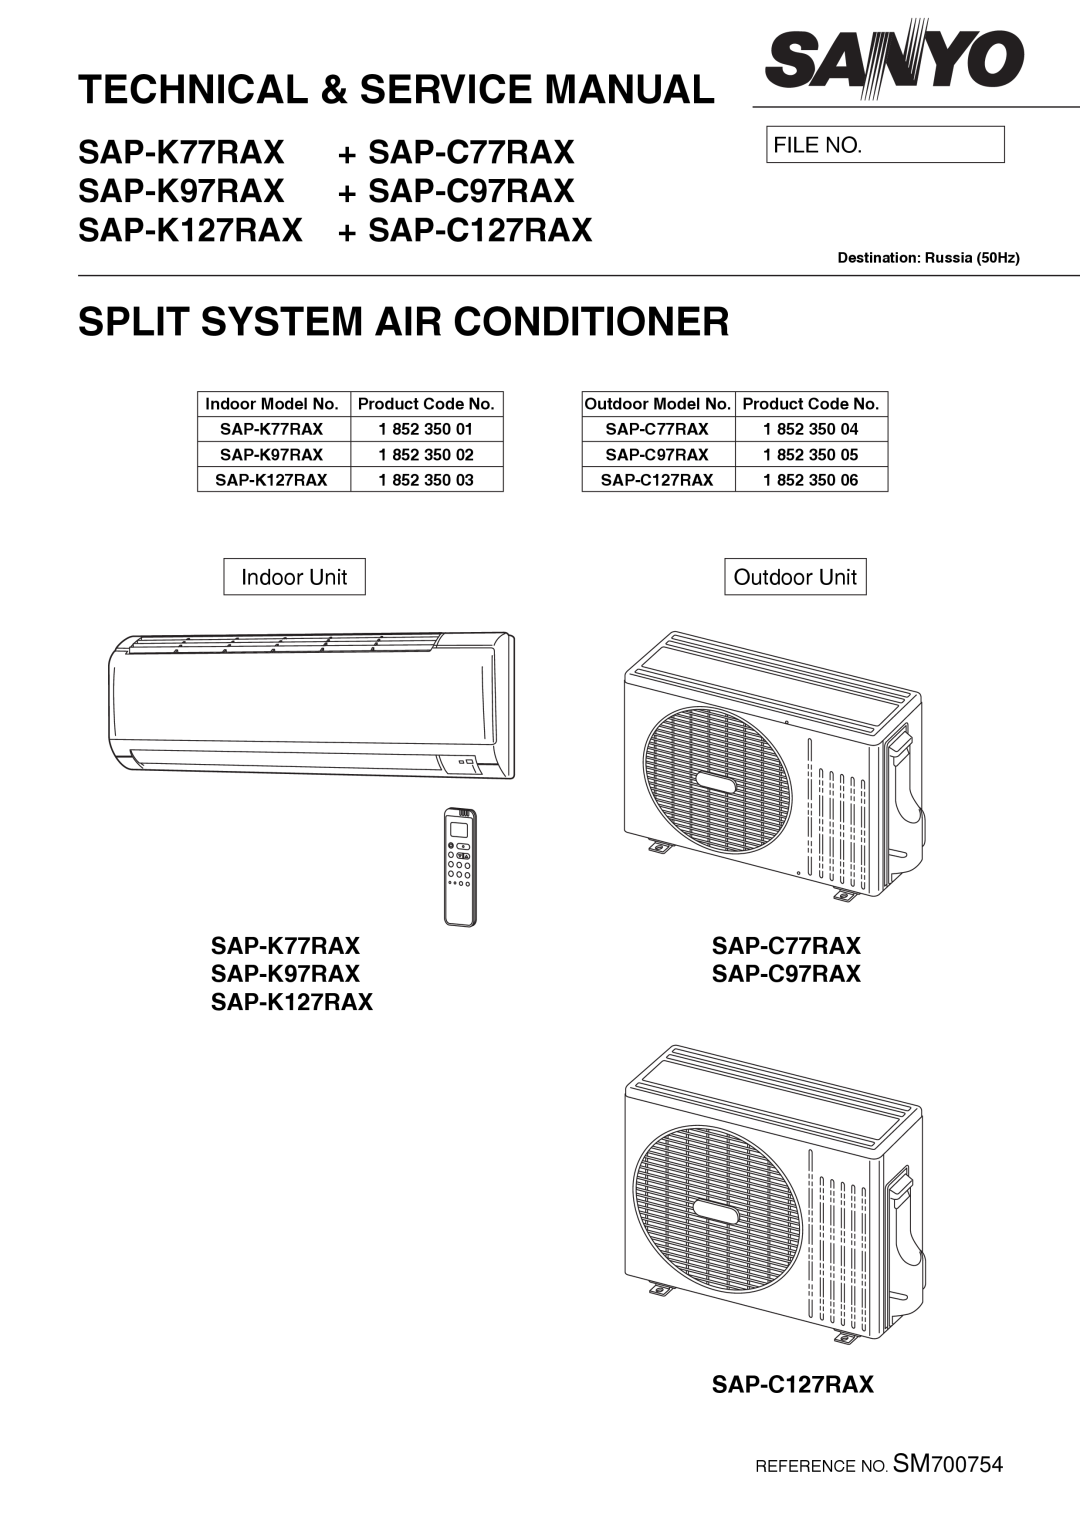 Sanyo Sanyo Split System Air Conditoner service manual SAP-K77RAX, + SAP-C77RAX, SAP-K97RAX, + SAP-C97RAX, SAP-K127RAX 